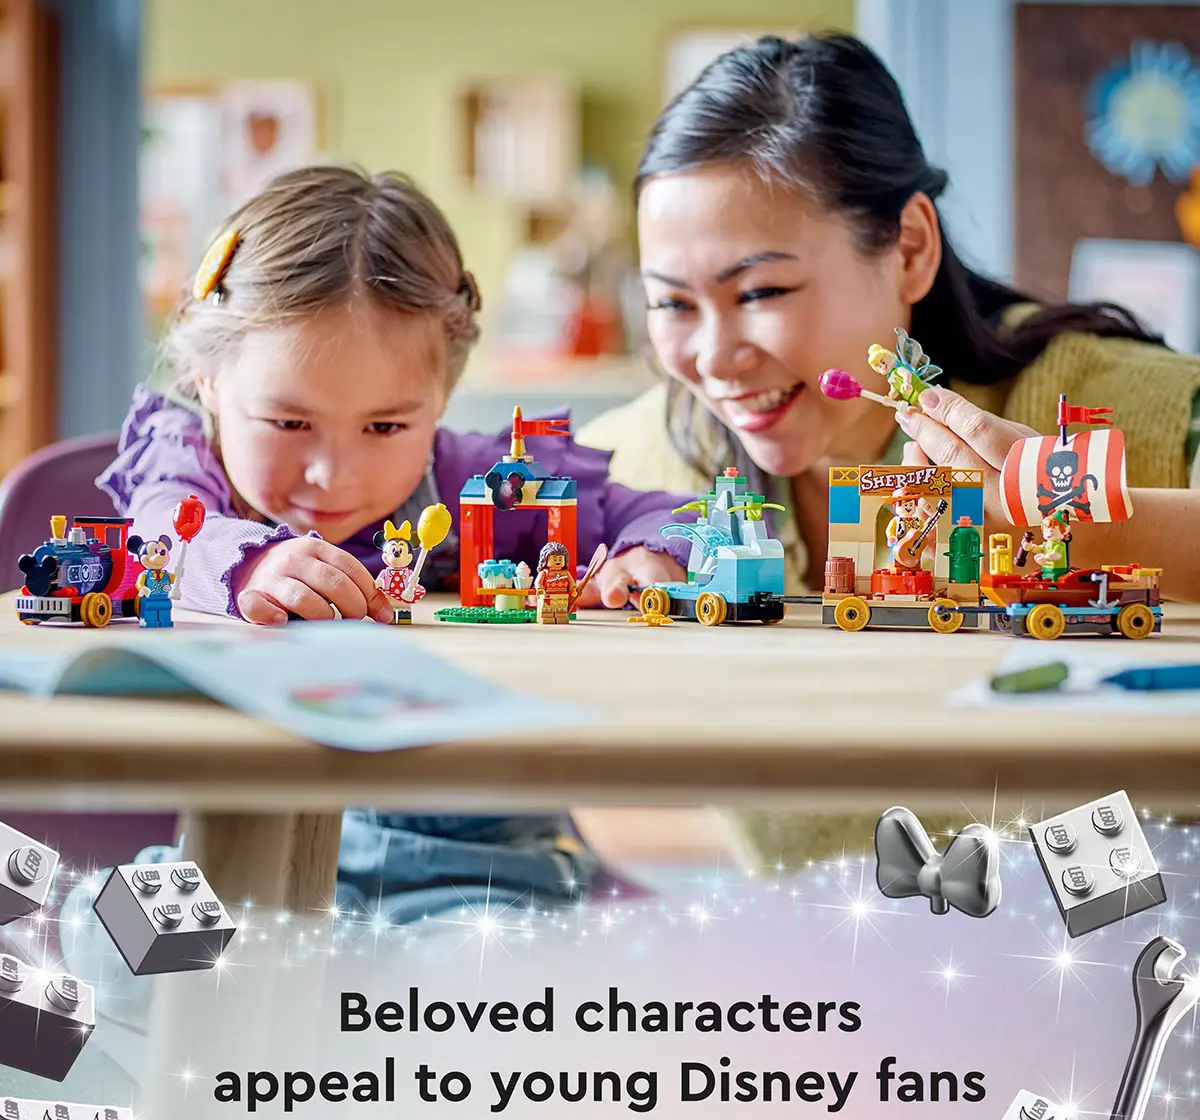 Lego Disney: Disney Celebration Train 43212 Building Toy Set (200 Pieces), 4Y+